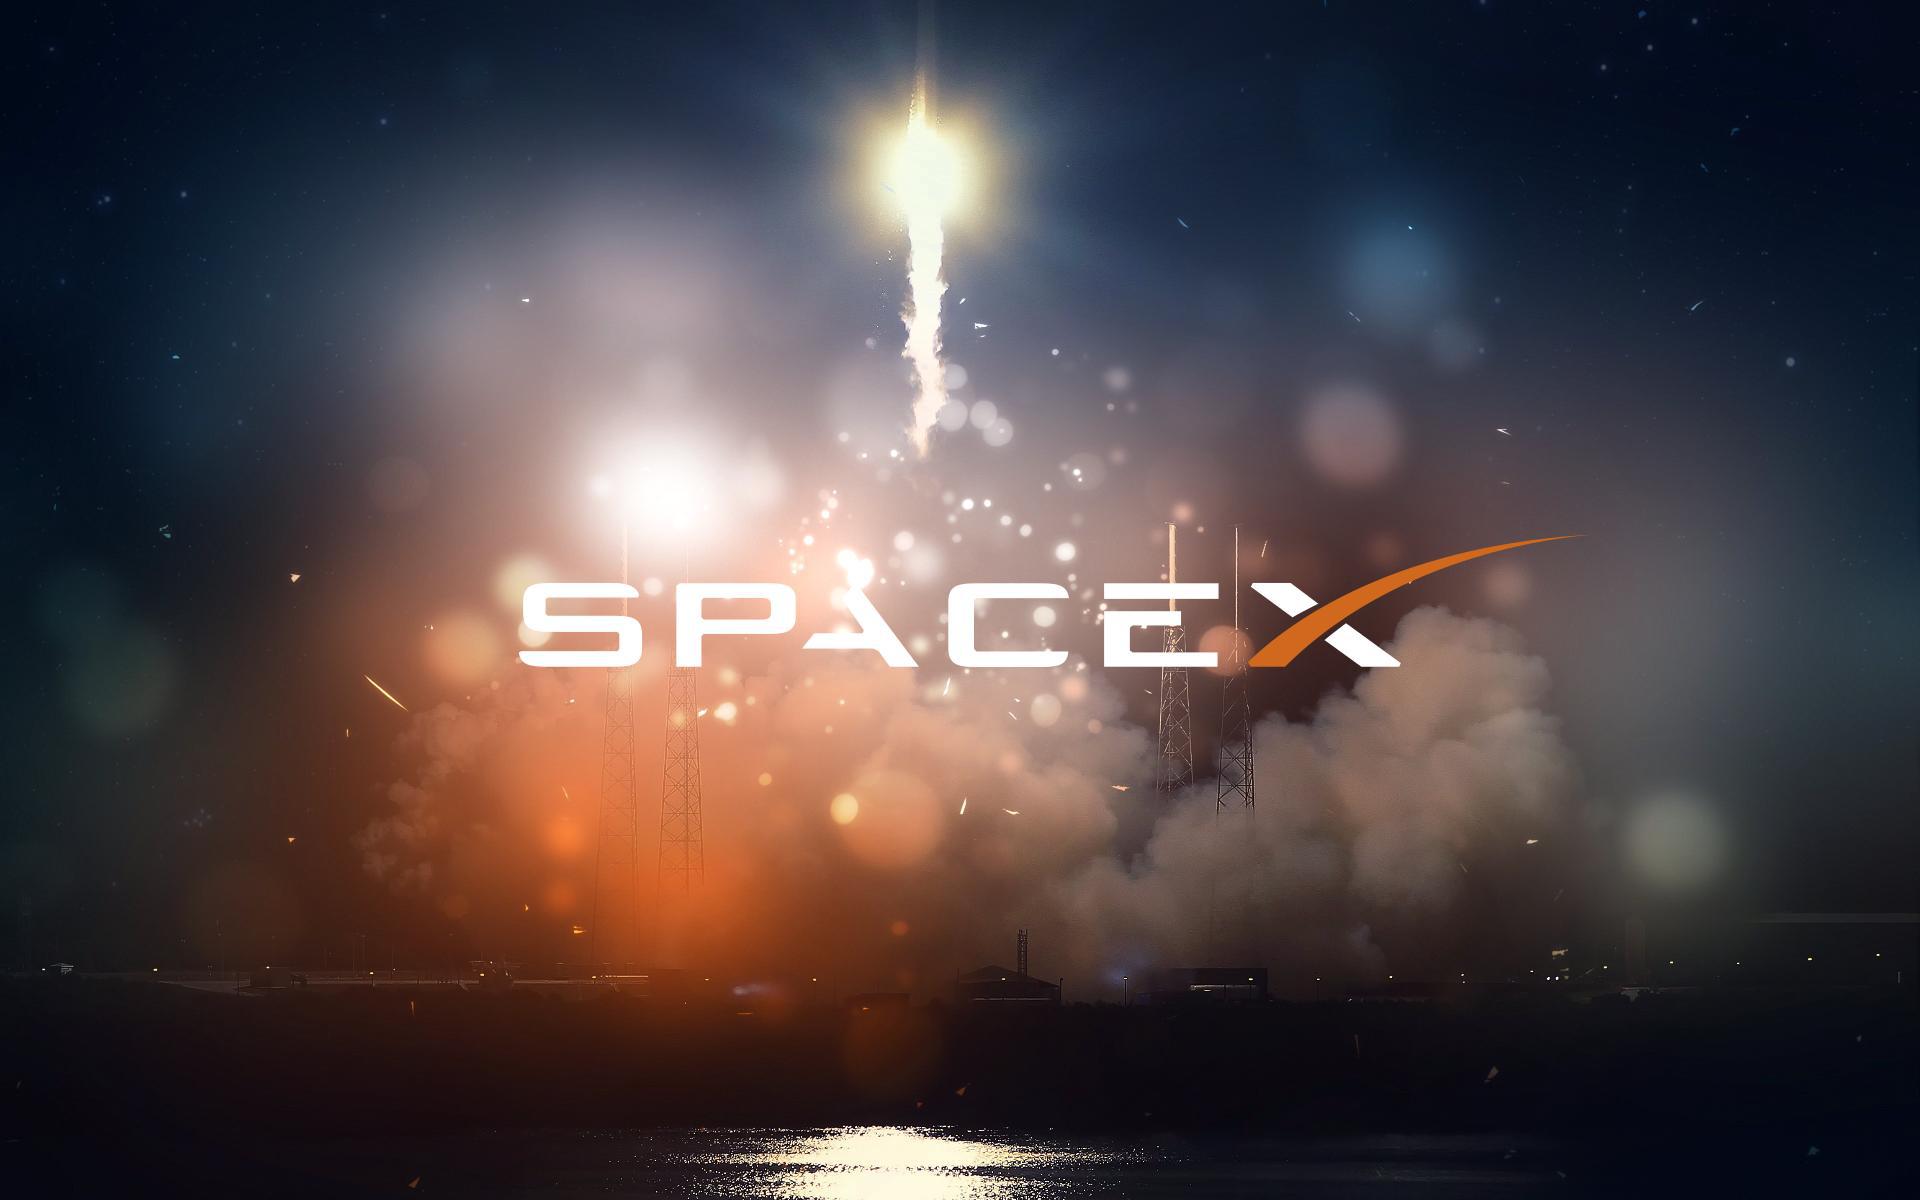 spacex desktop wallpaper